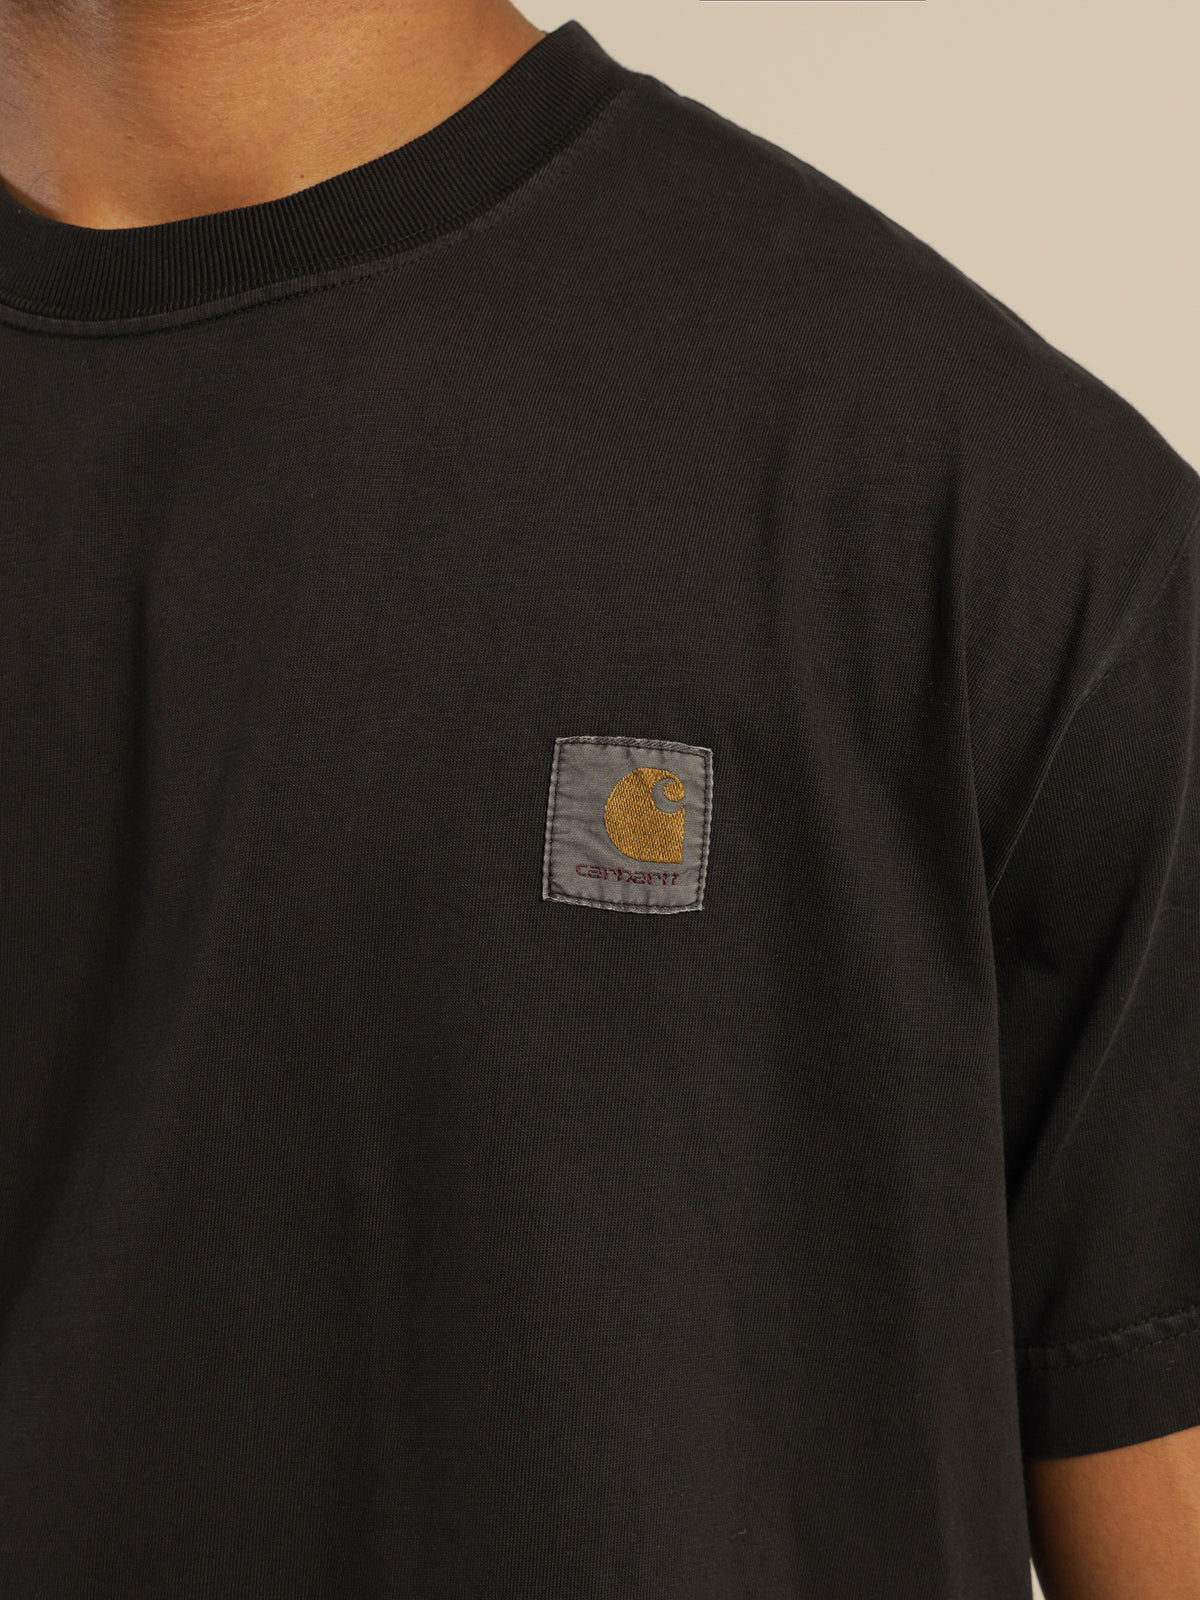 Short Sleeve Vista T-Shirt in Charcoal Grey